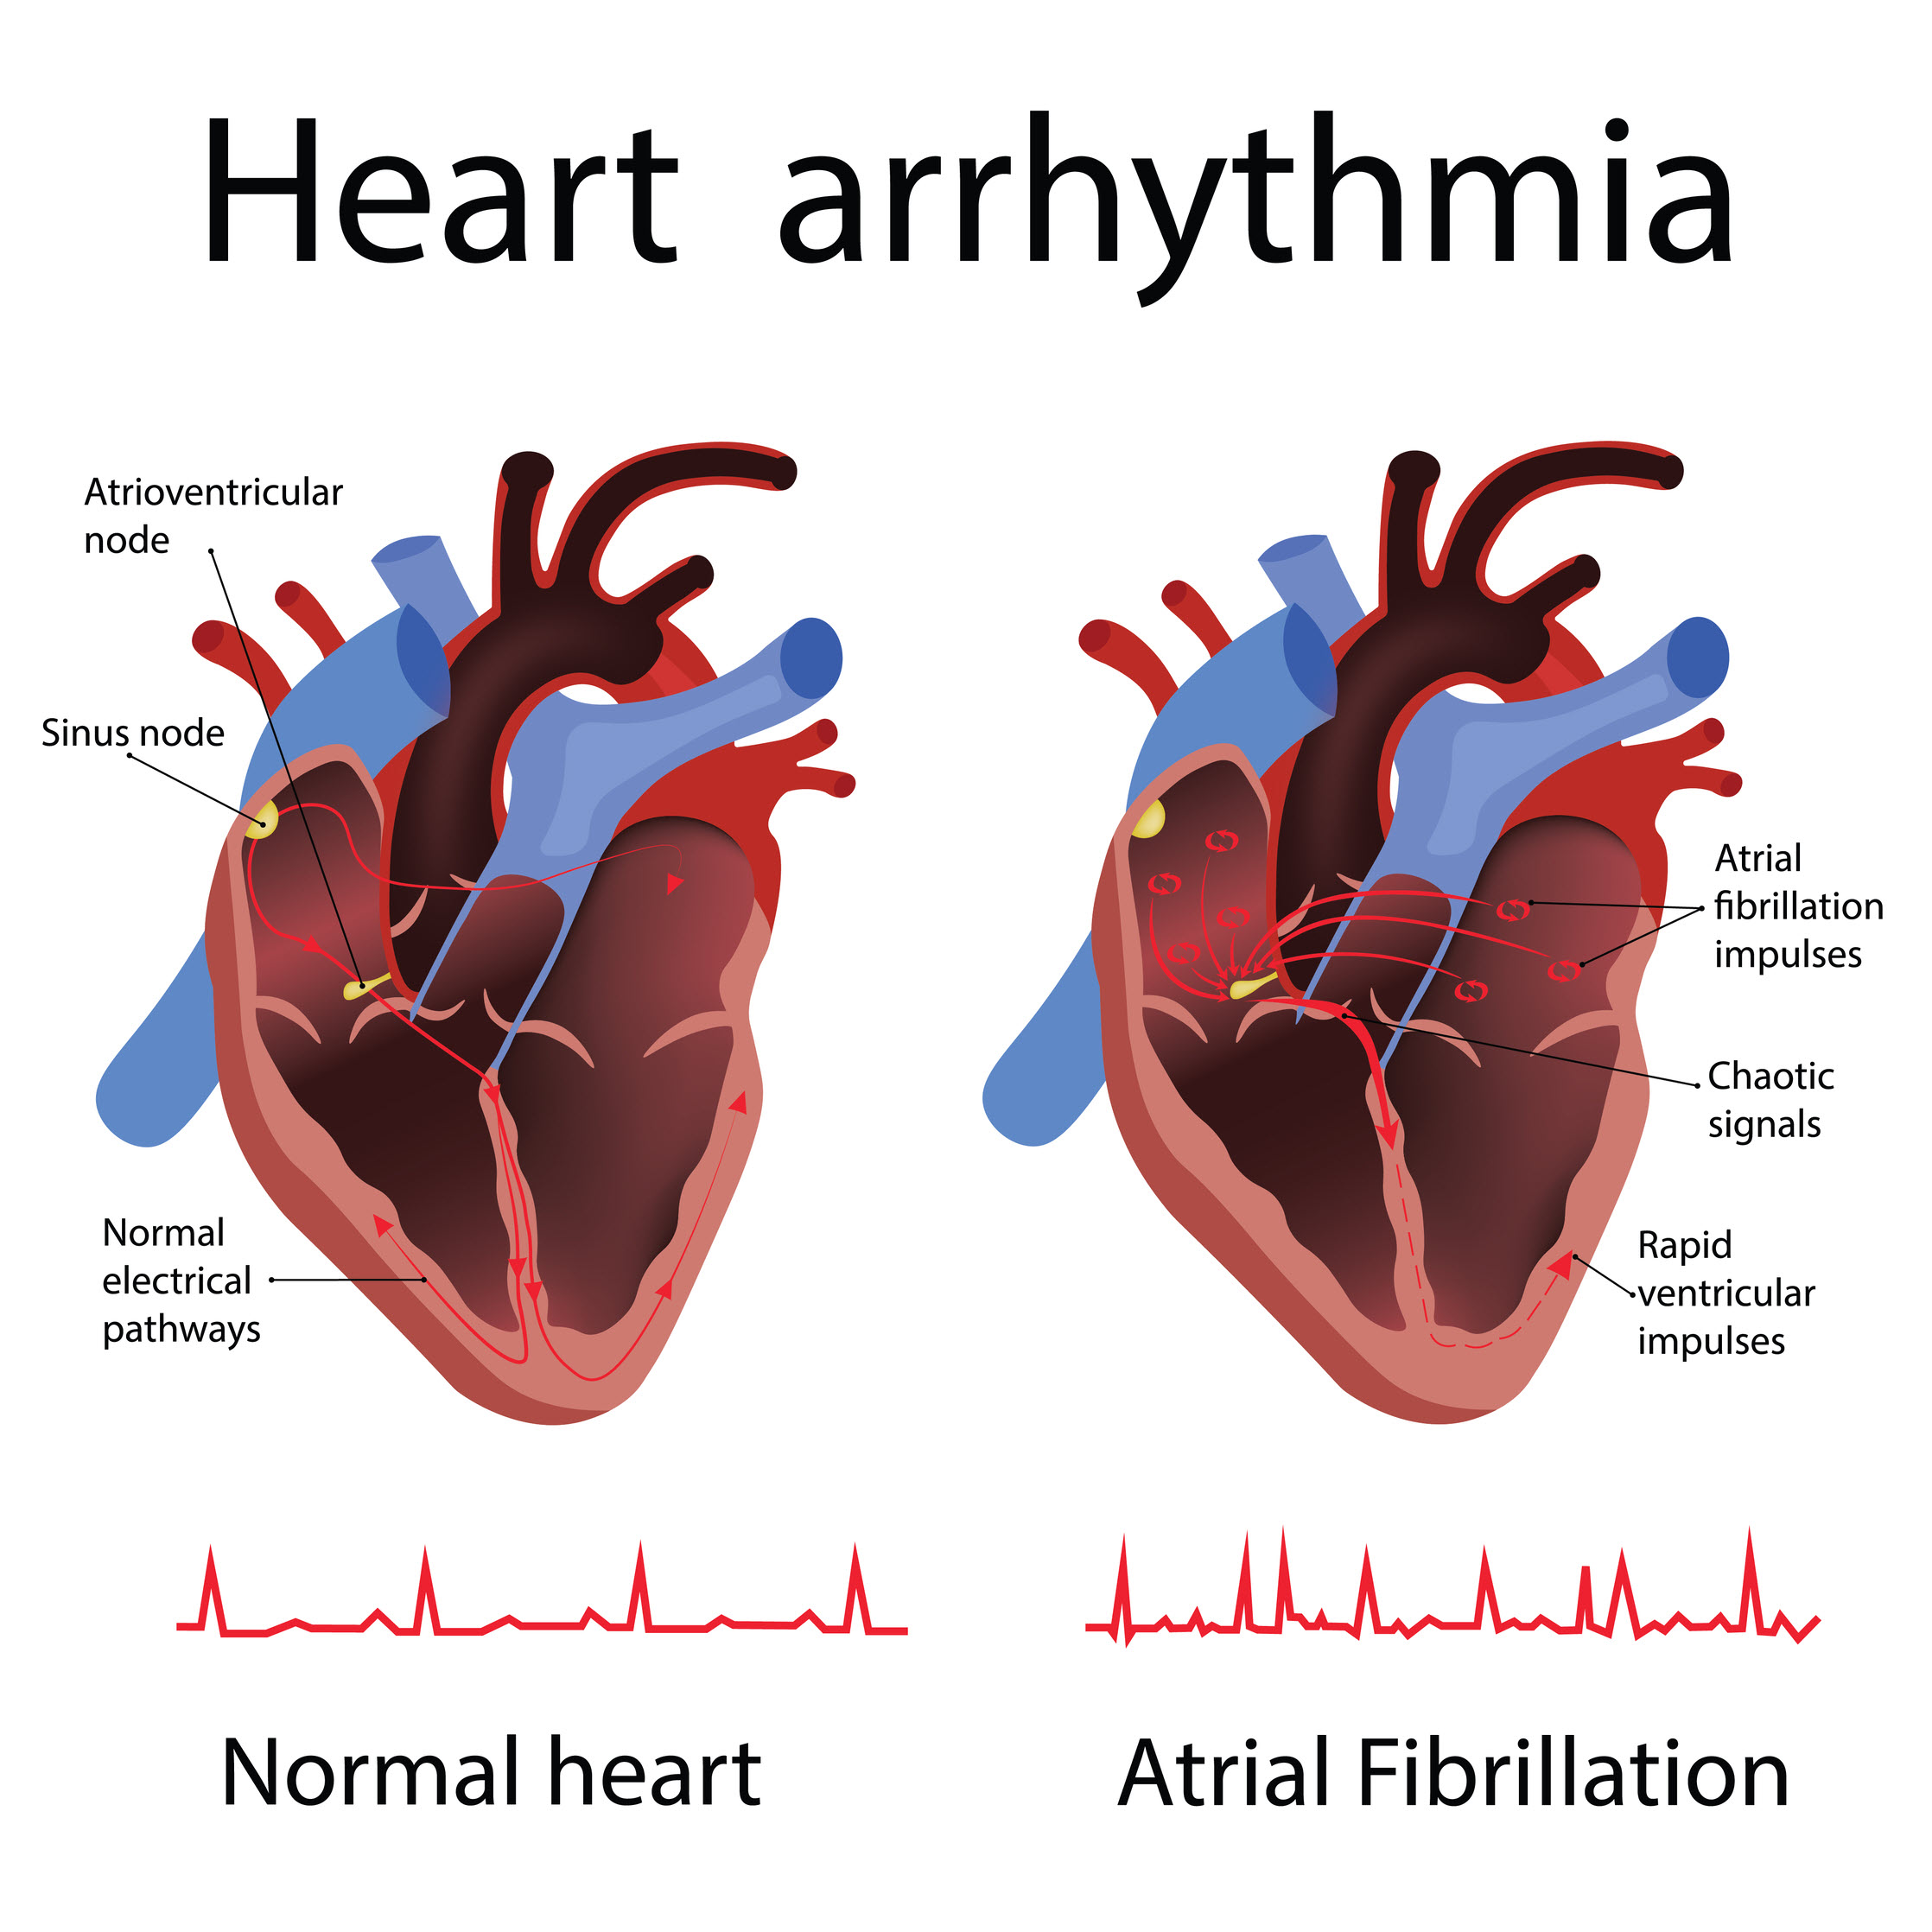 10 Symptoms of arrhythmia You Should Never Ignore